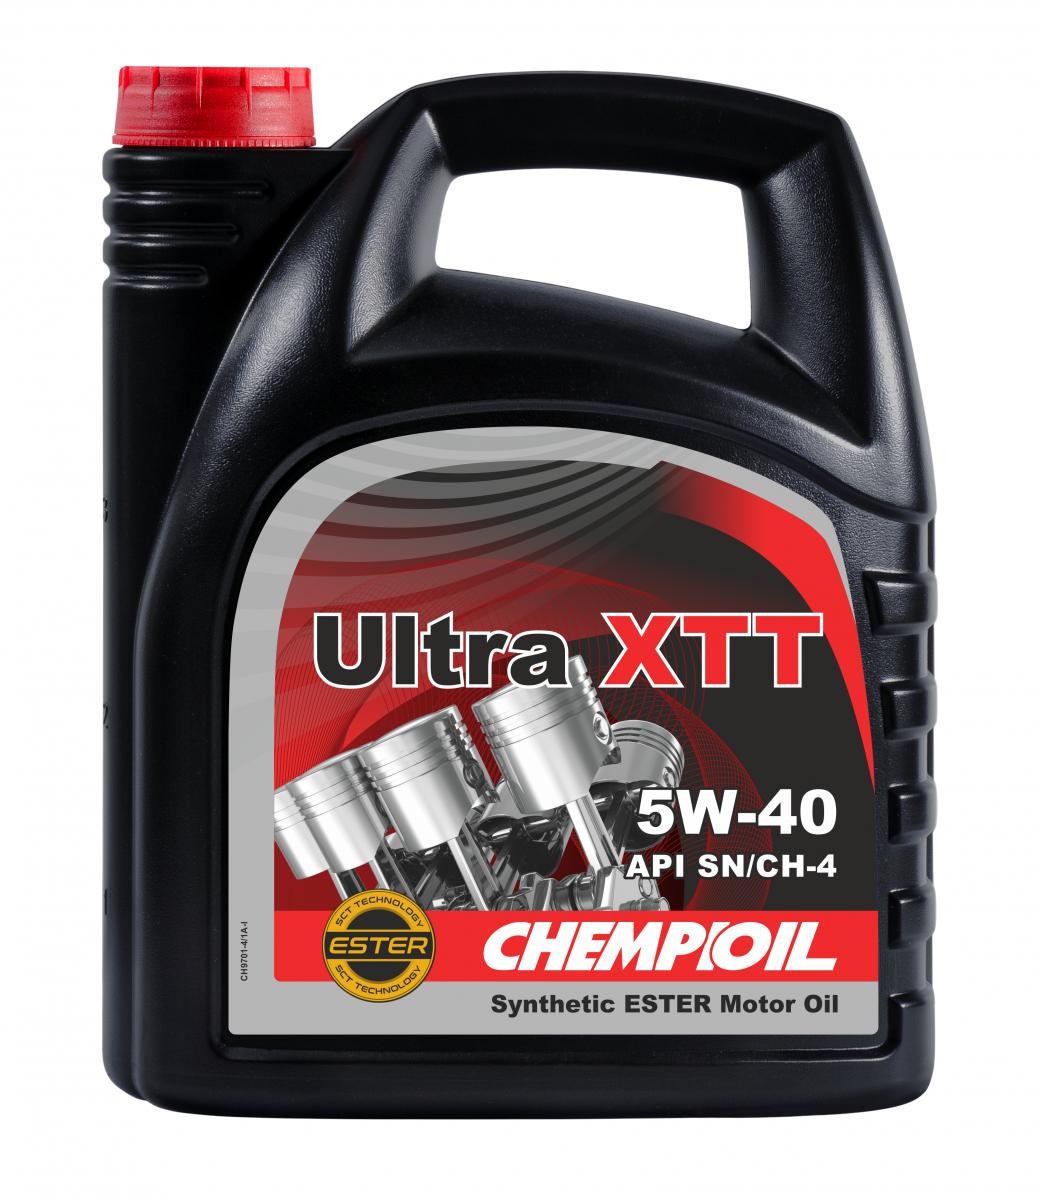 Comprar Aceite motor coche CHEMPIOIL CH9701-4 Ultra, XTT 5W-40, 4L